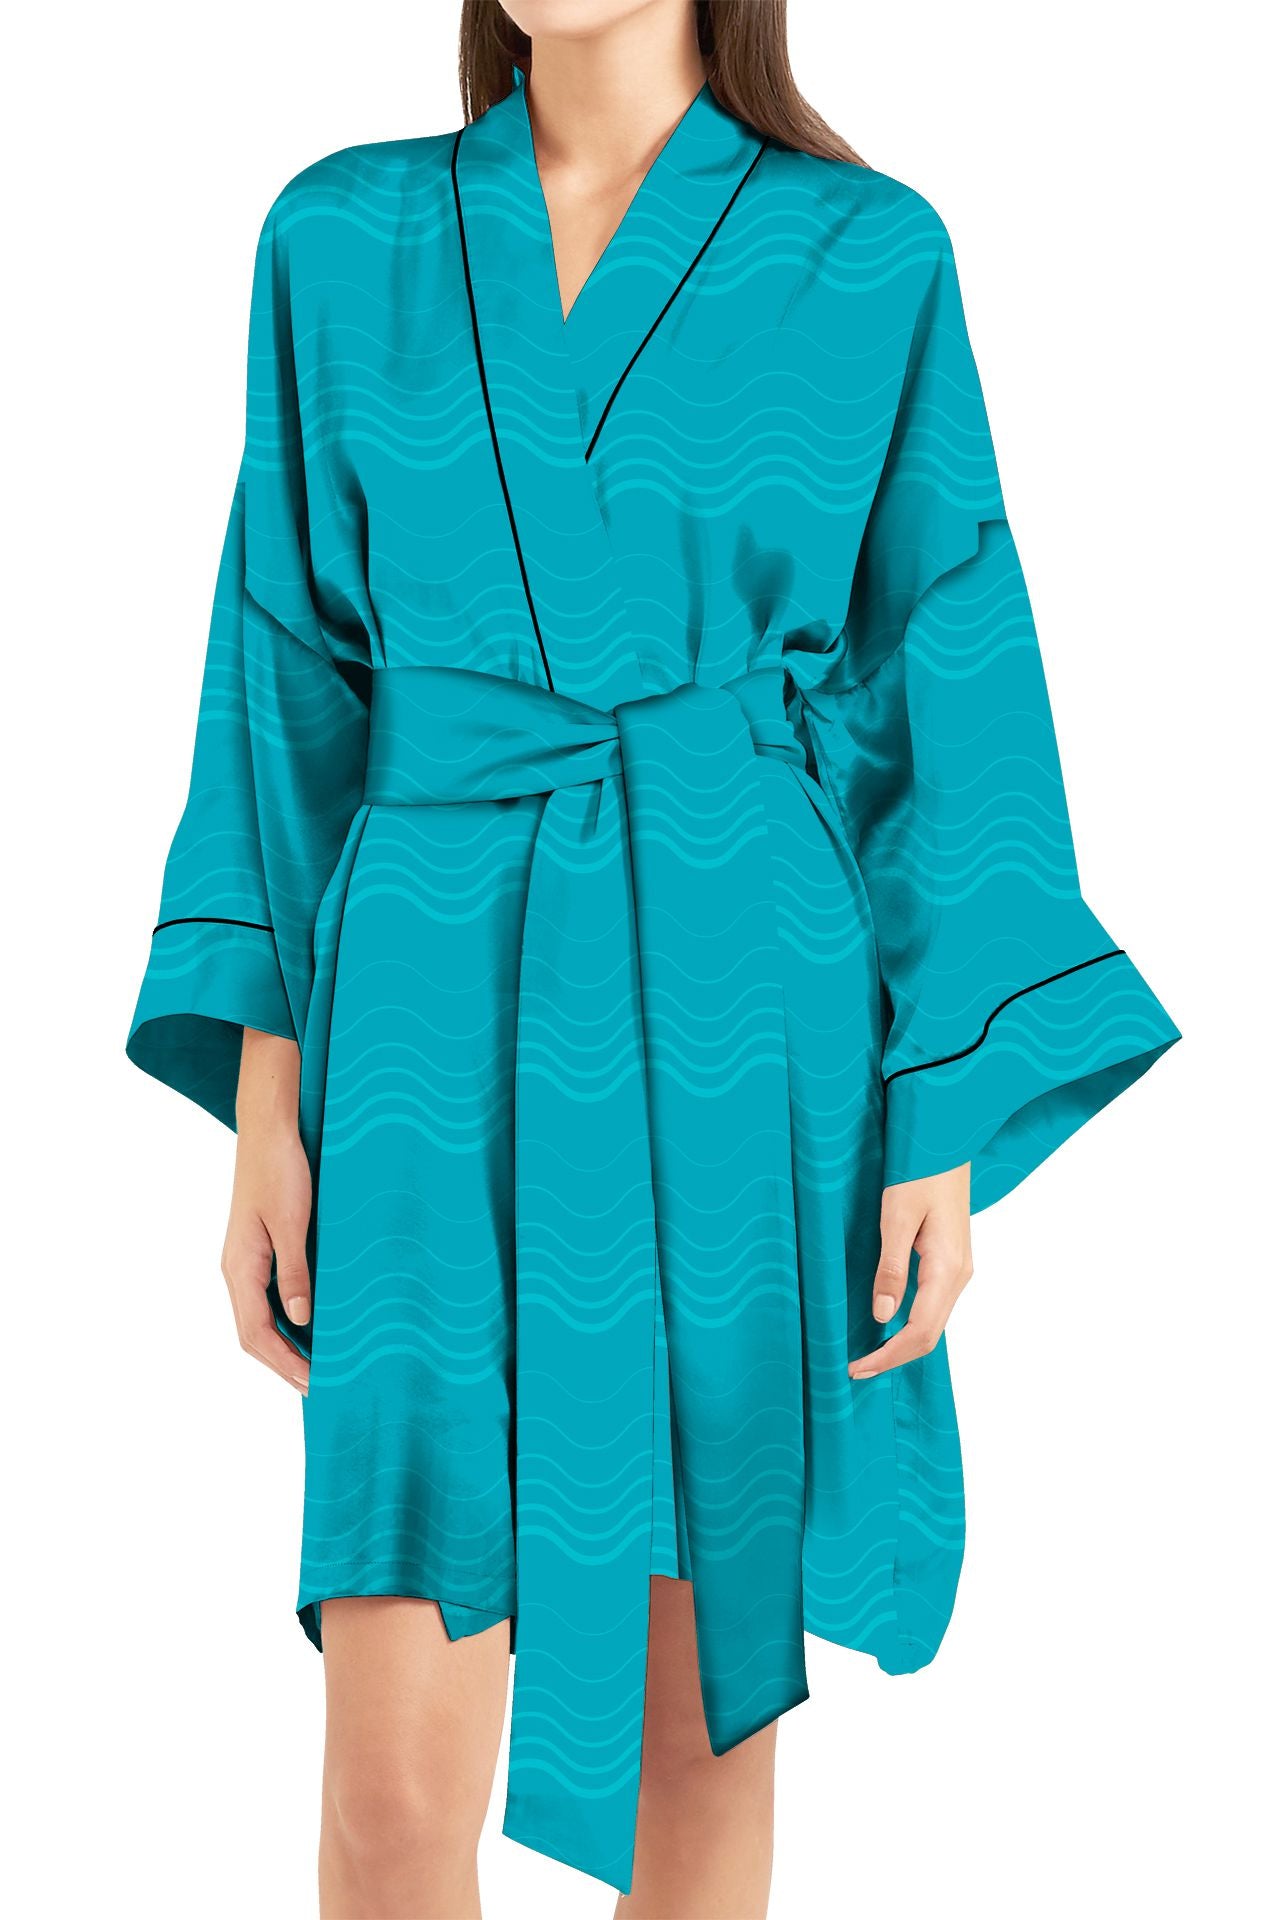 "light blue robe silk" "Kyle X Shahida" "kimono light blu" "silk robe women short"